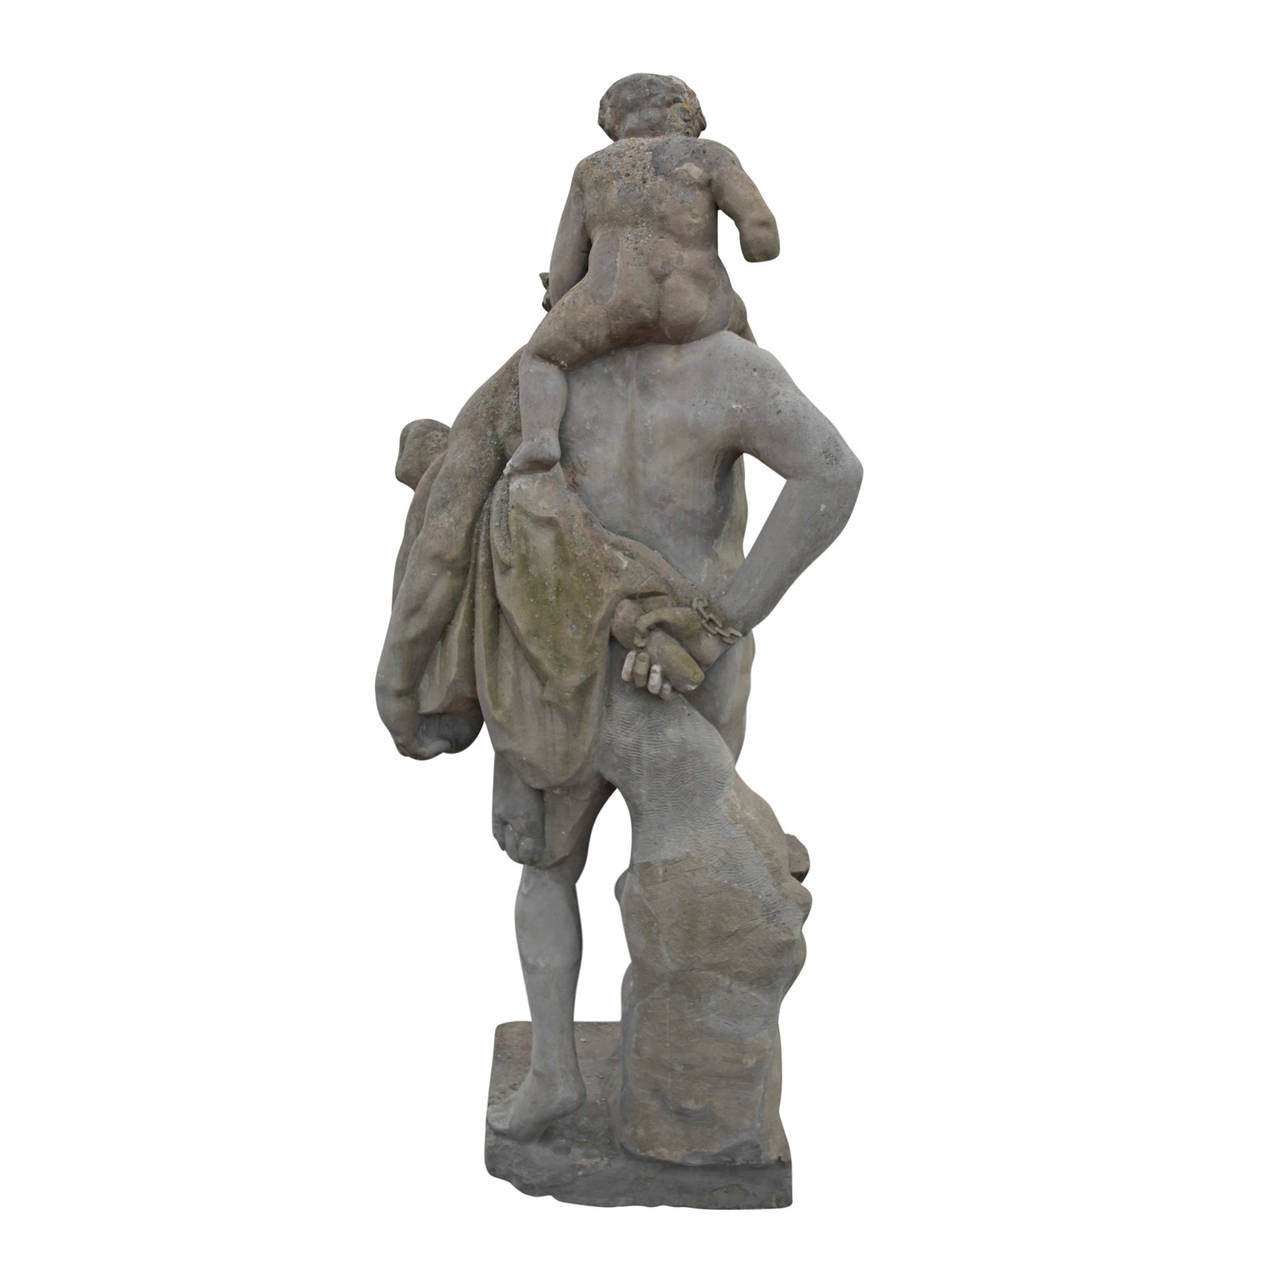 Baroque German Herakles Statue out of Sandstone, circa 1720s